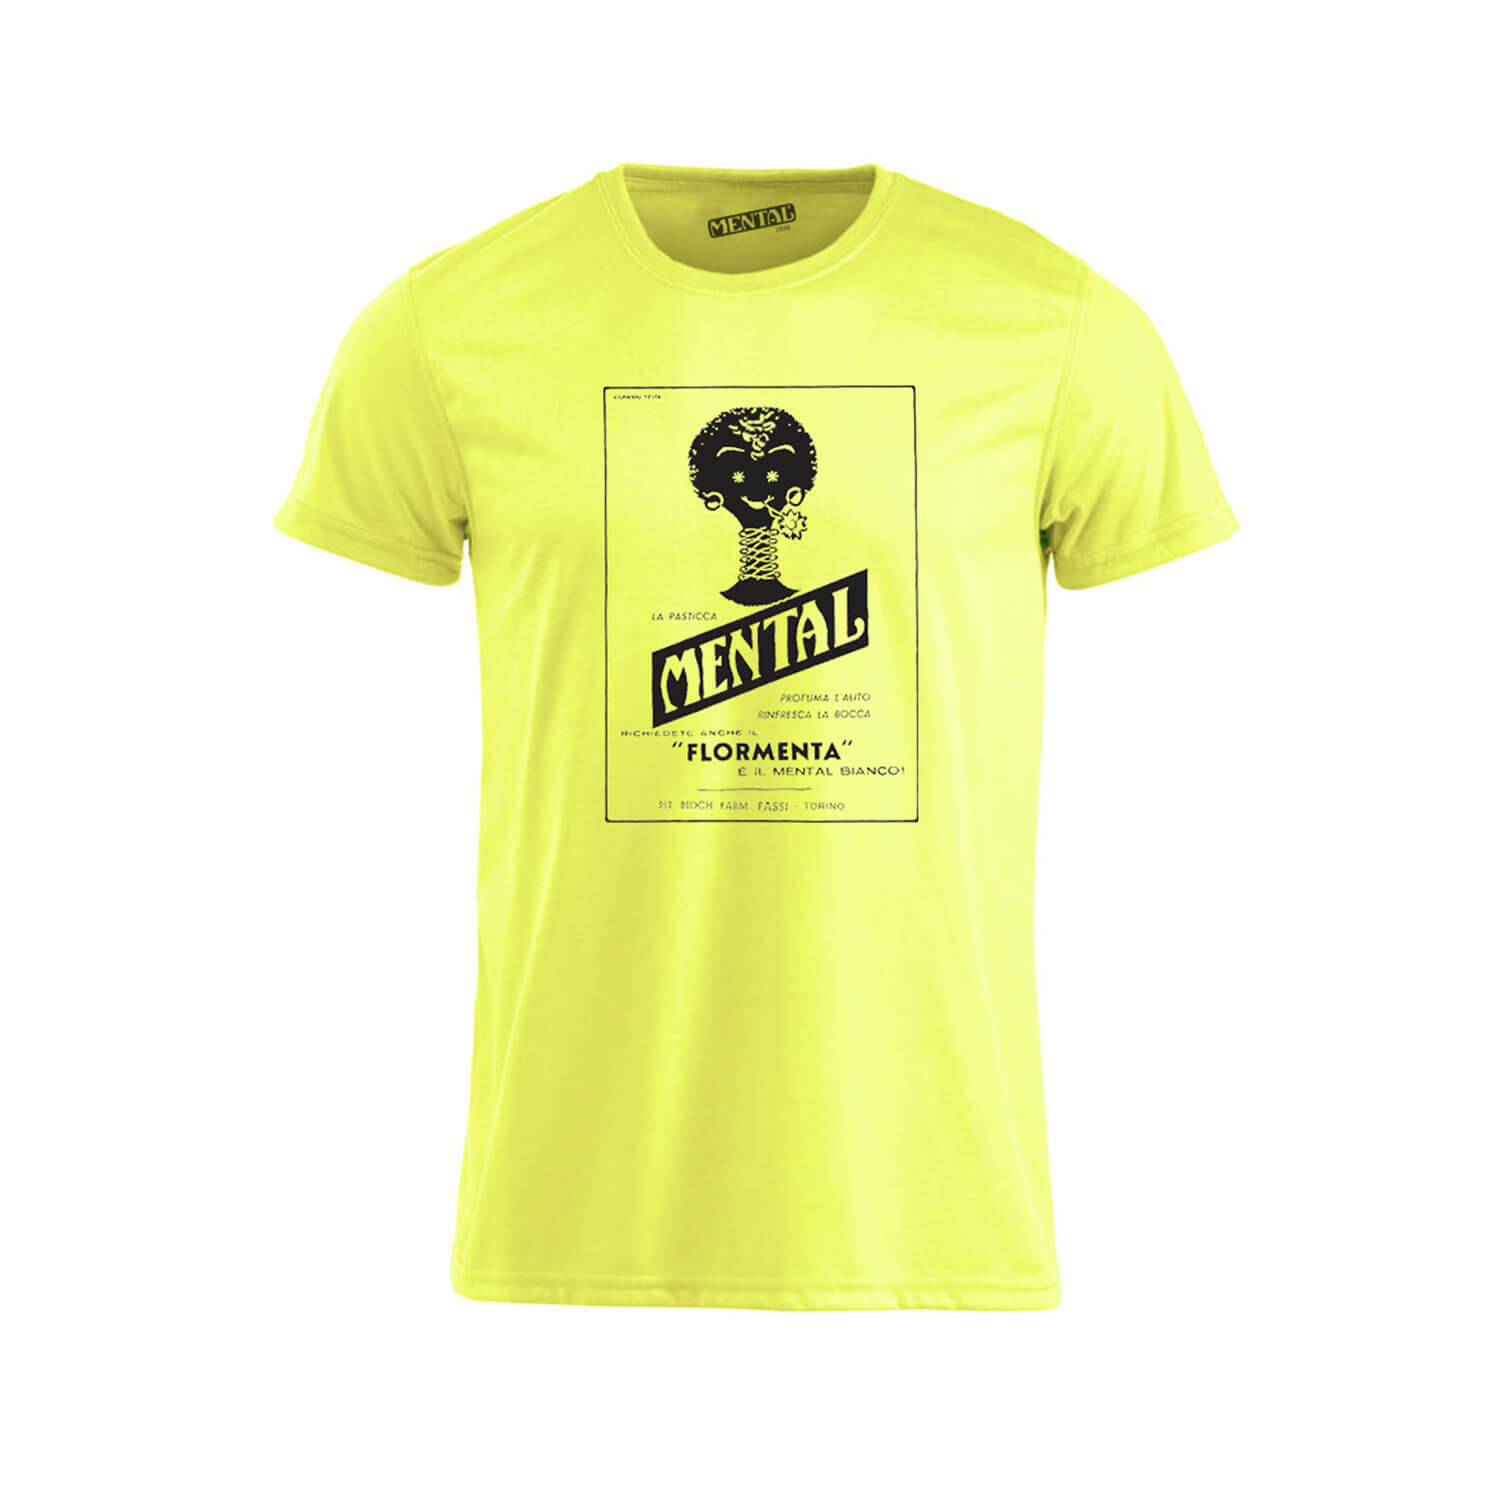 T-shirt neon yellow Vintage Mental - size XL - T-shirt